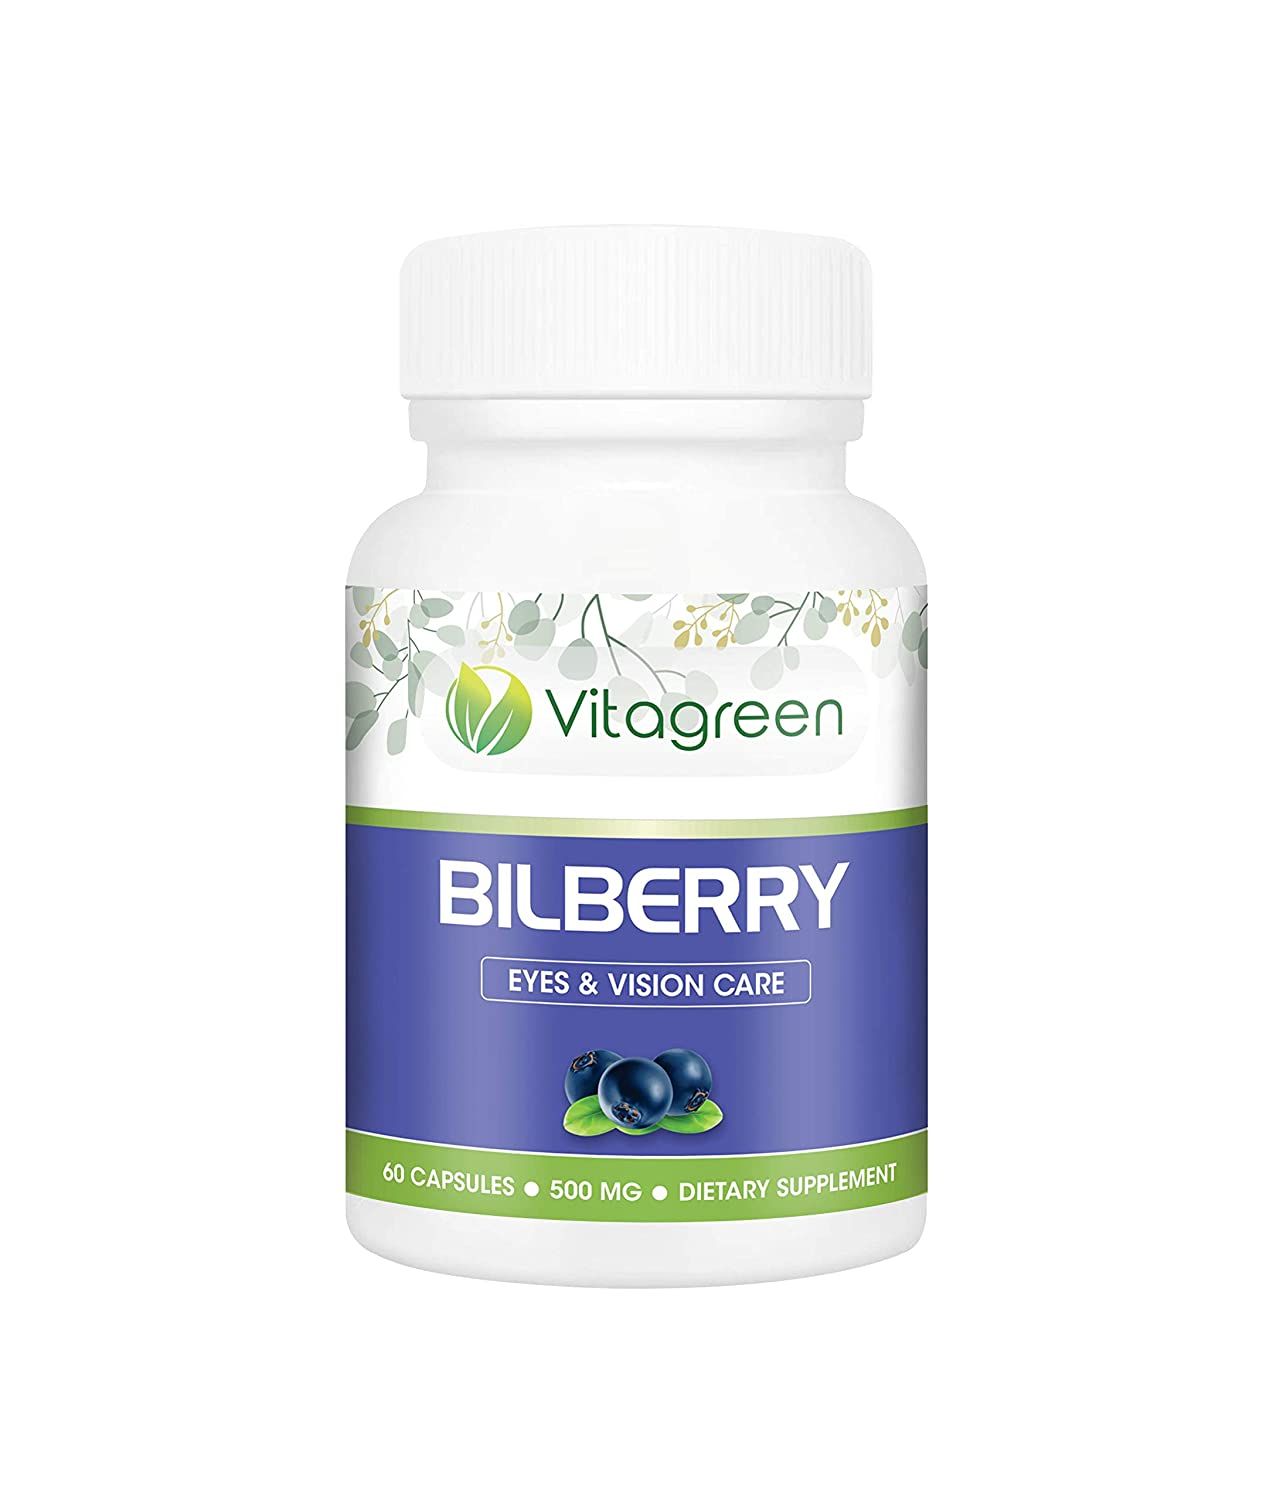 VitaGreen Bilberry Eyes & Vision Capsules Image